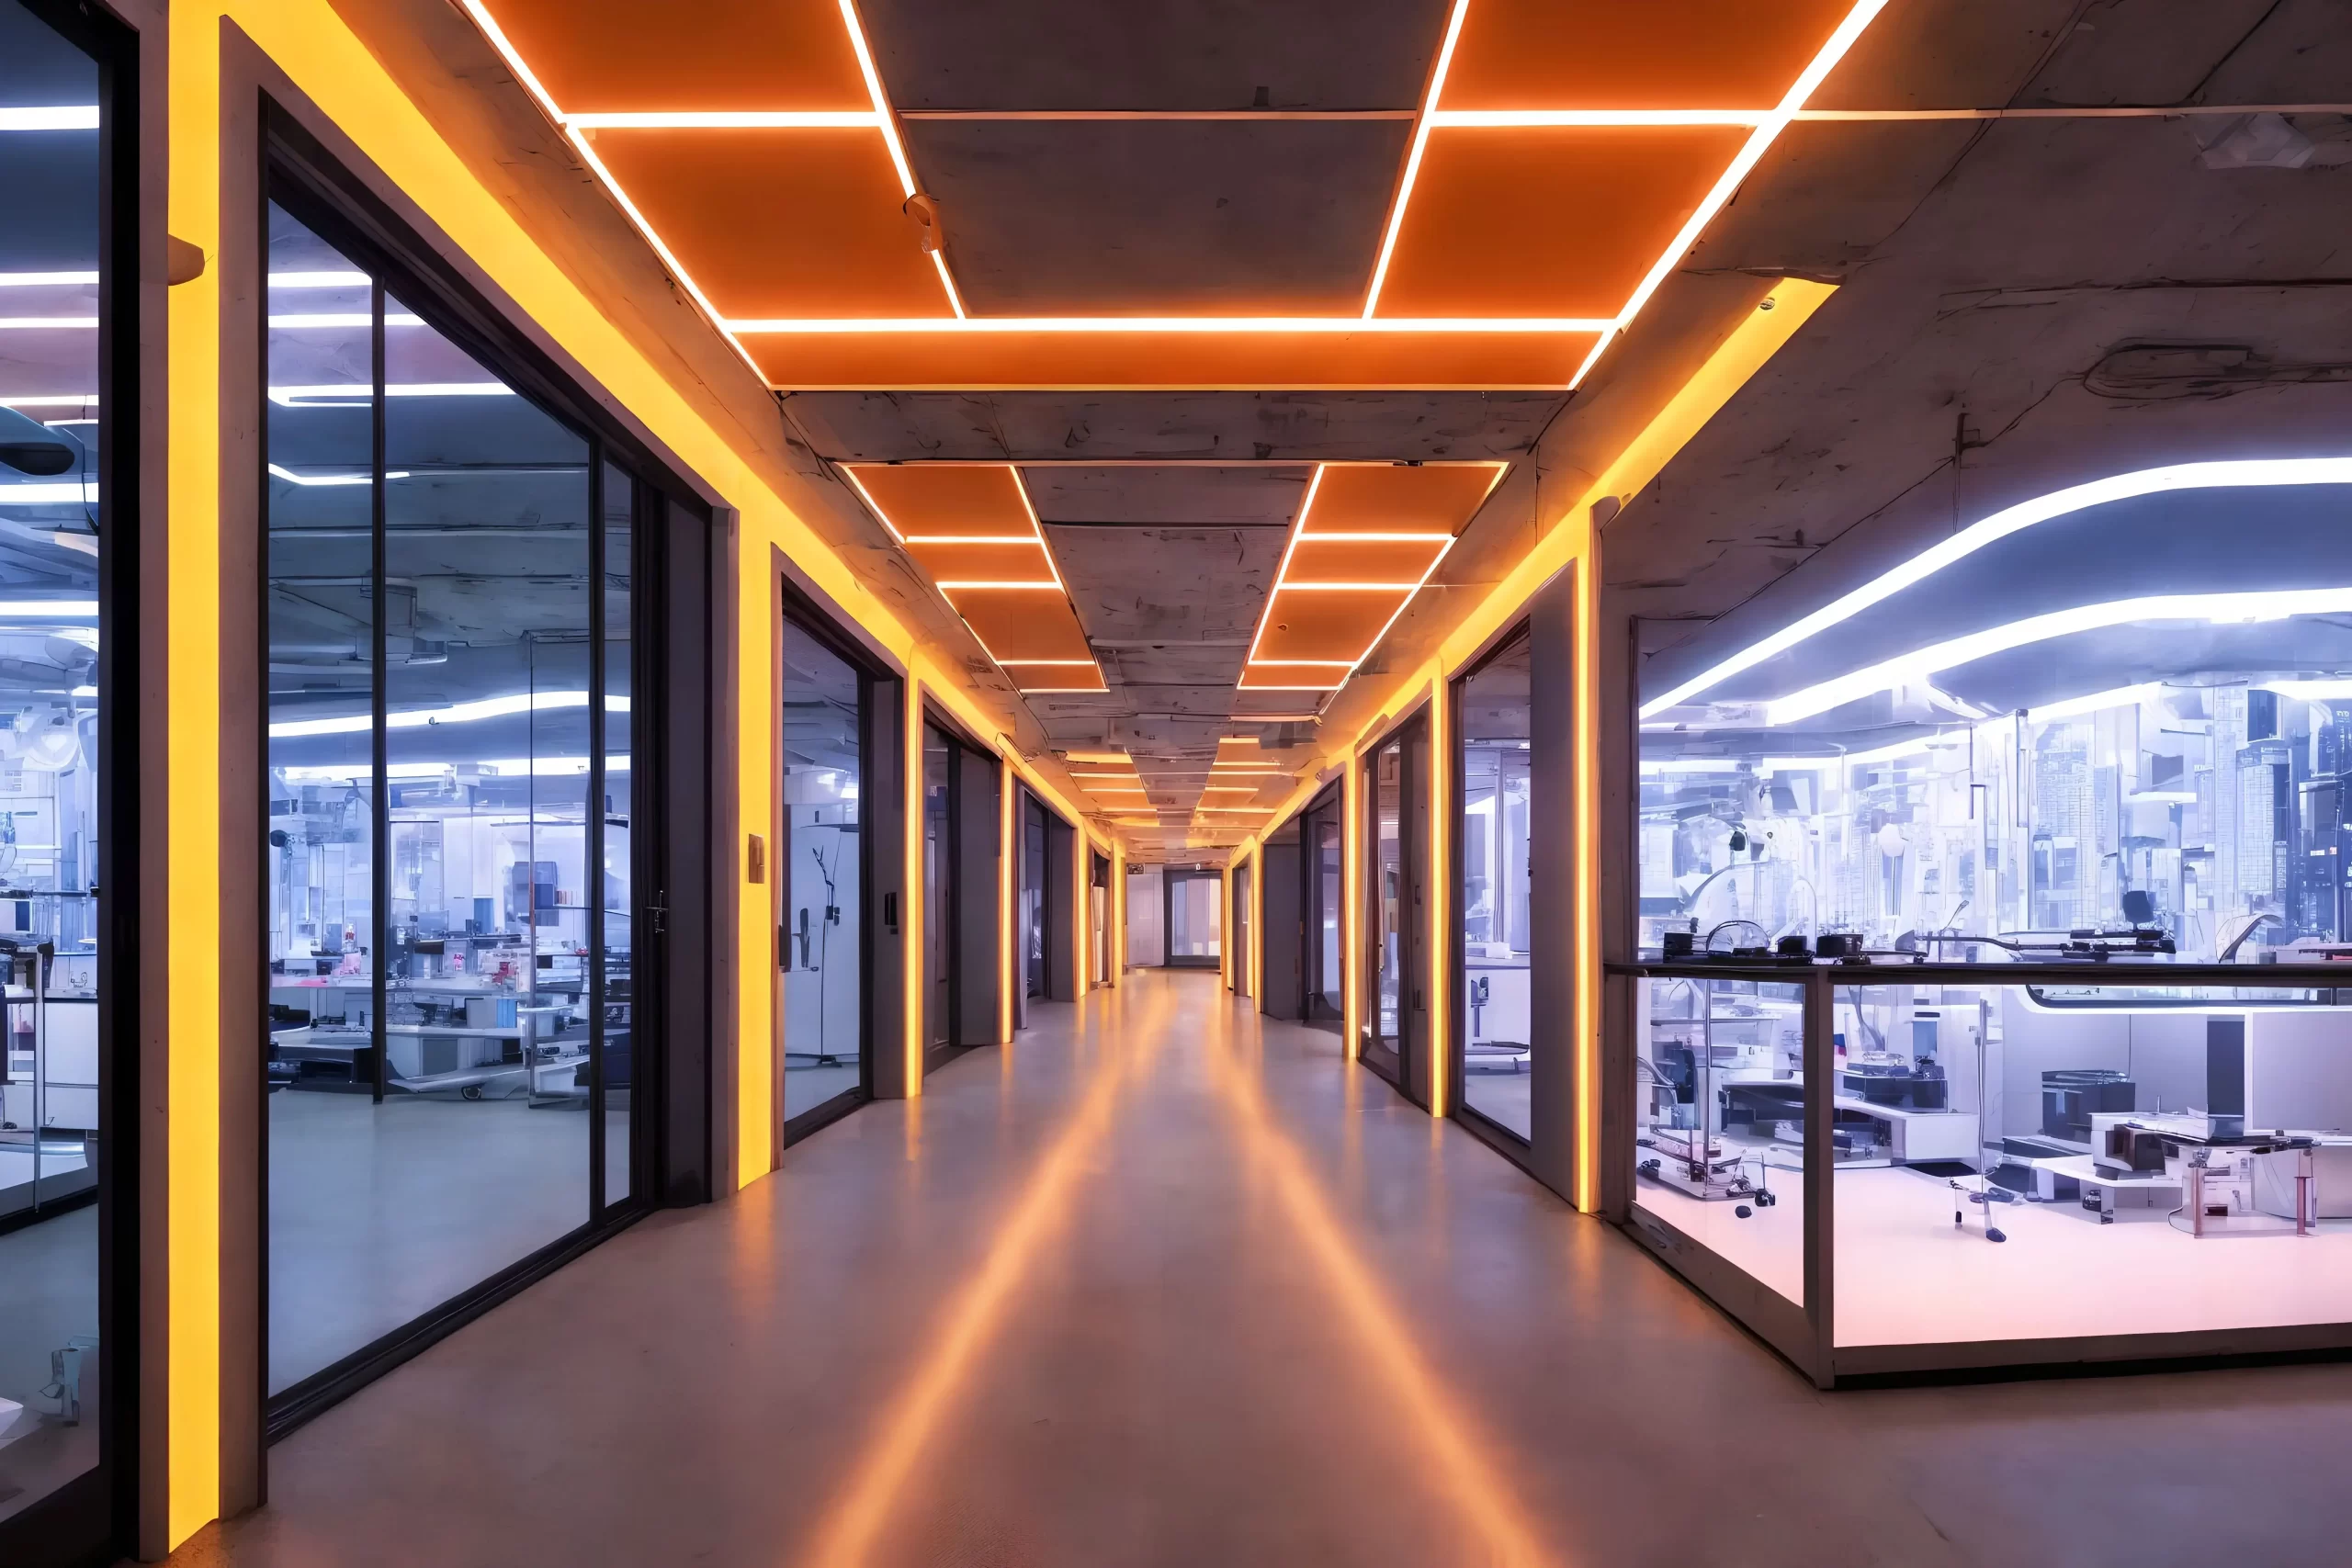 Futuristic Interior Design Laboratory Lab Server Room With Neon Light Generative Art By Ai 1 Scaled.webp